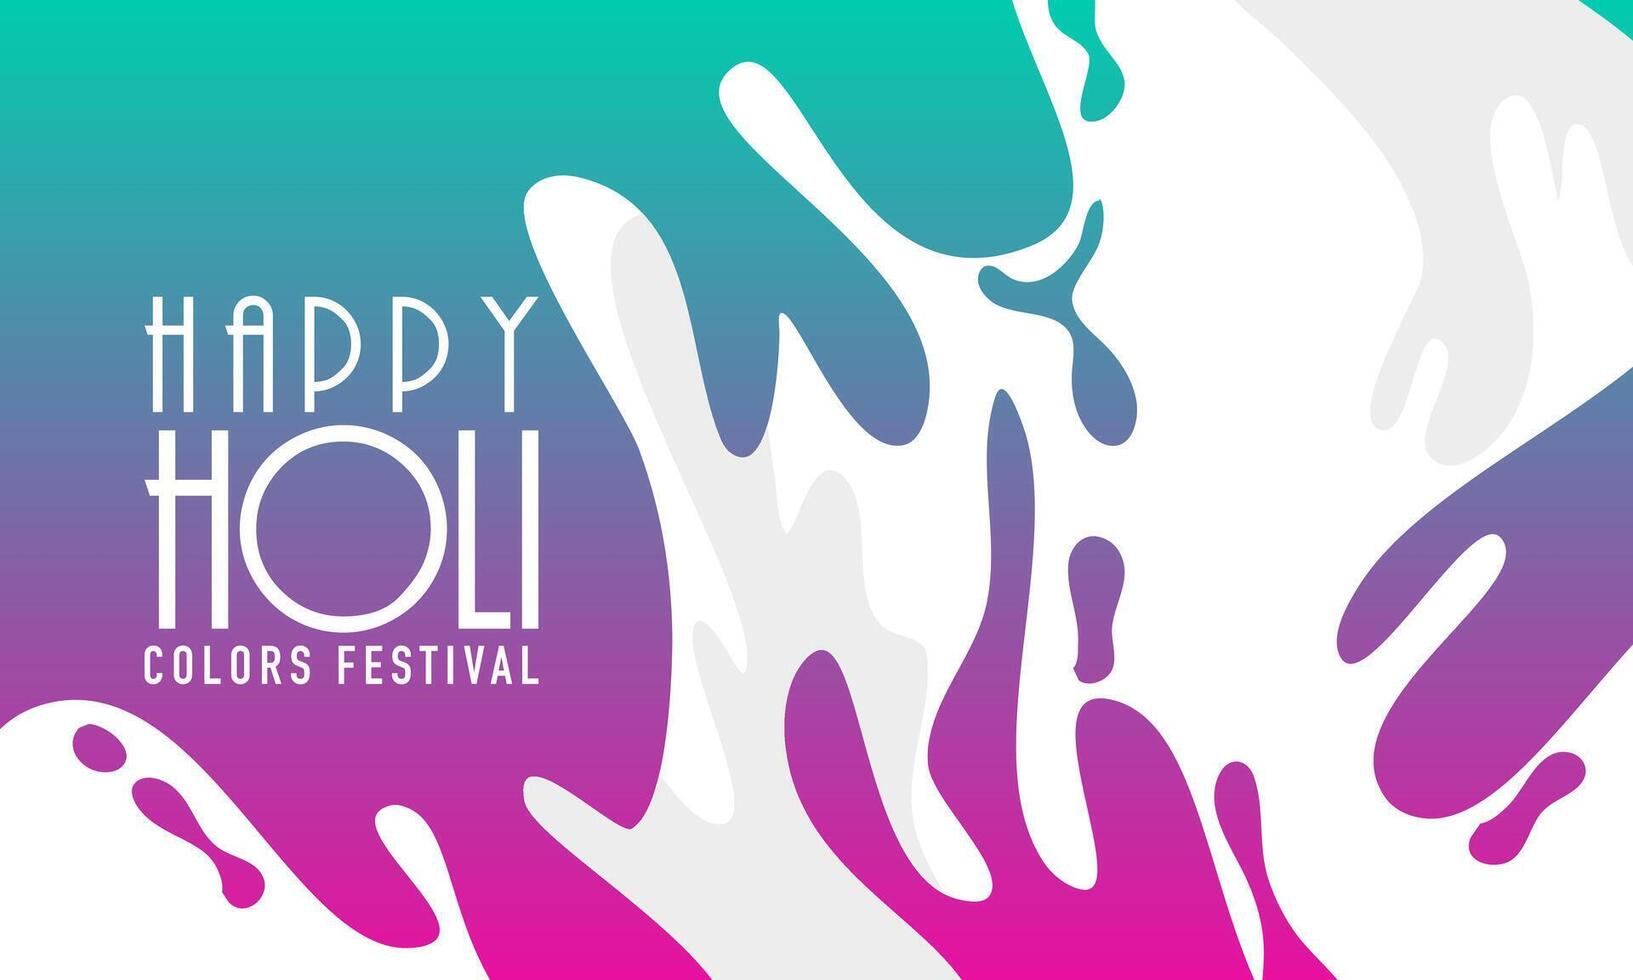 elegant gelukkig holi kleurrijk festival banier ontwerp vector